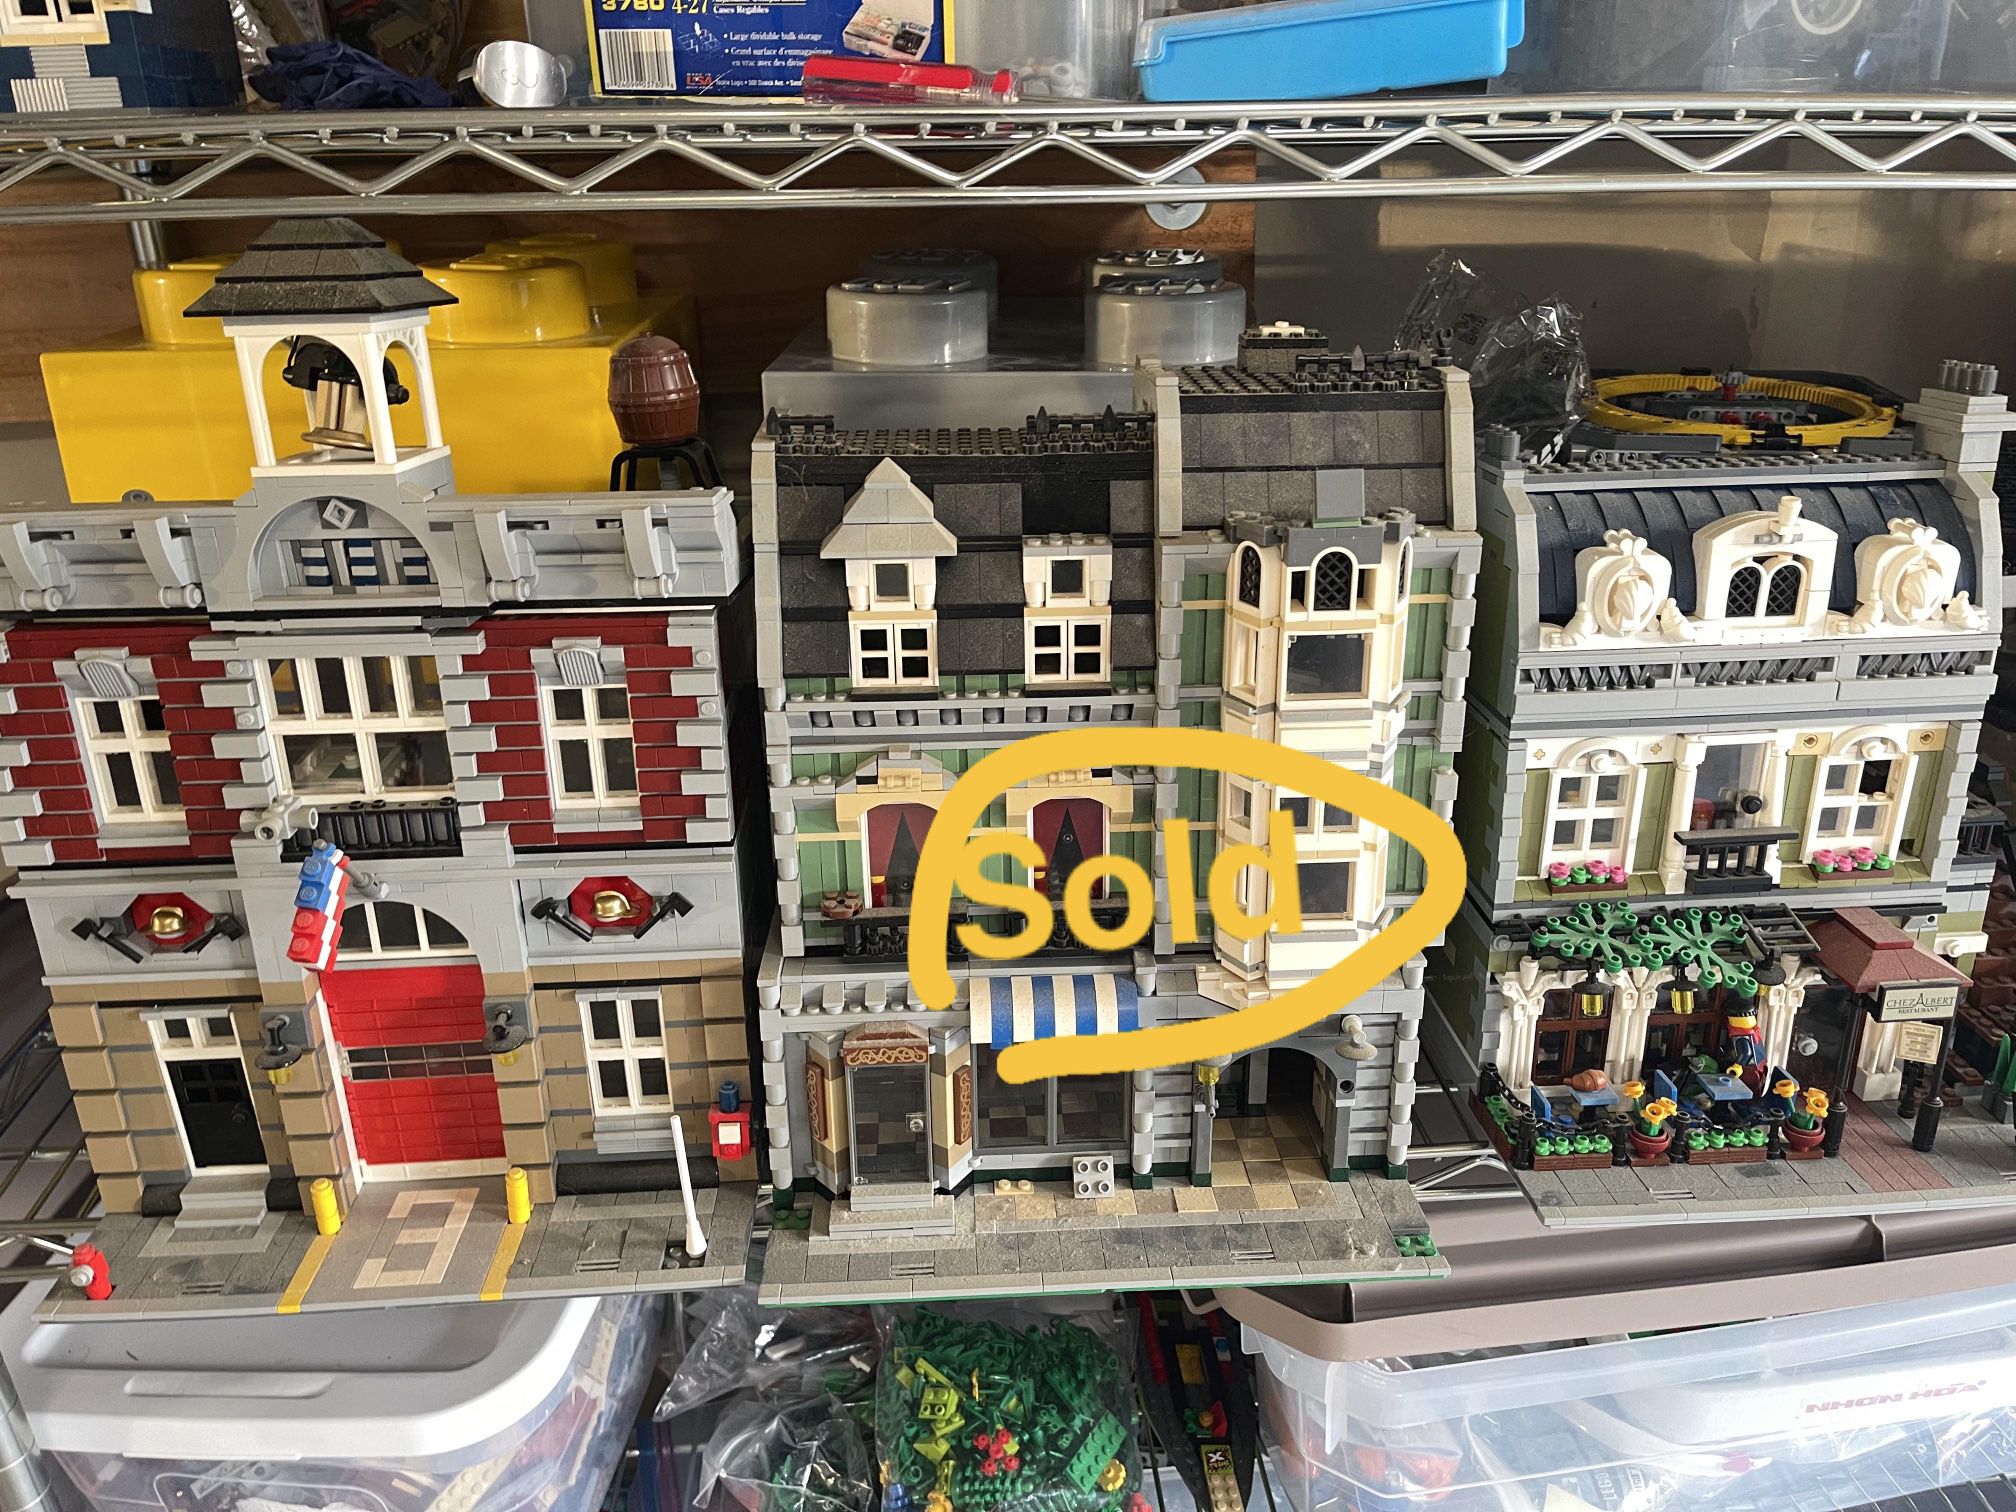 Lego Modular’s